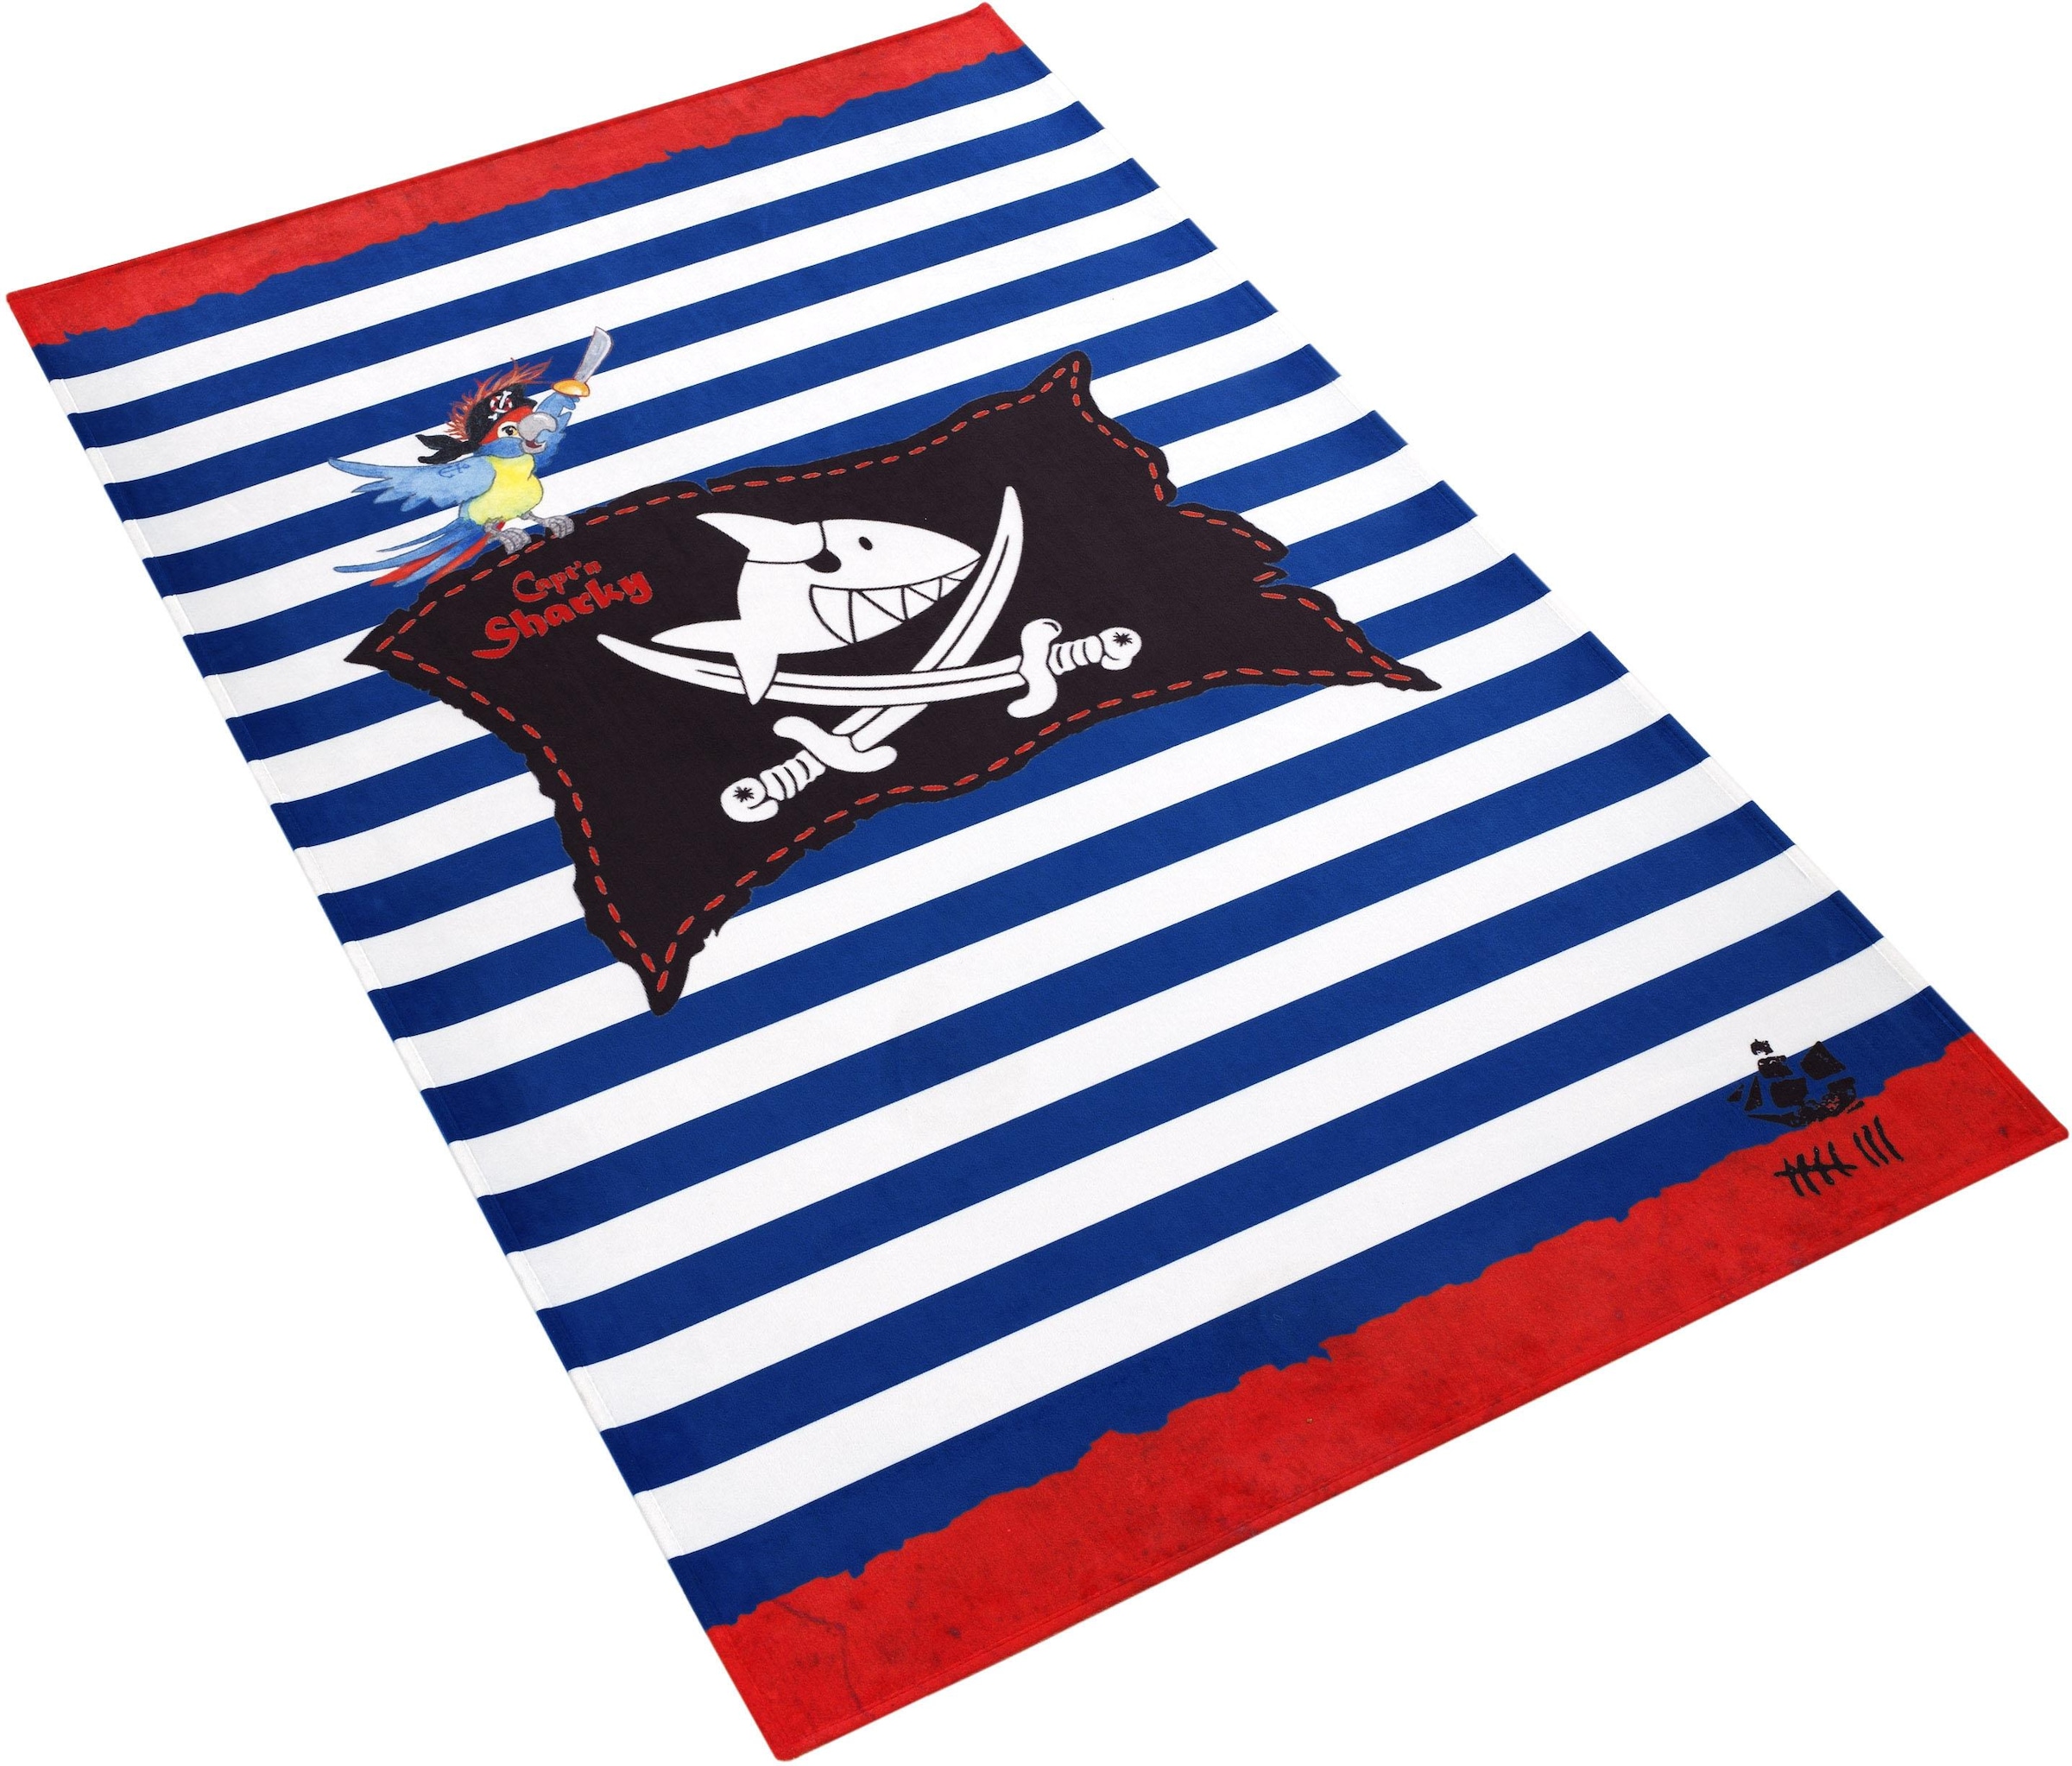 Capt`n Sharky Kinderteppich »SH-310«, rechteckig, bedruckter Stoff, gestreift, Motiv Piratenflagge, weiche Microfaser